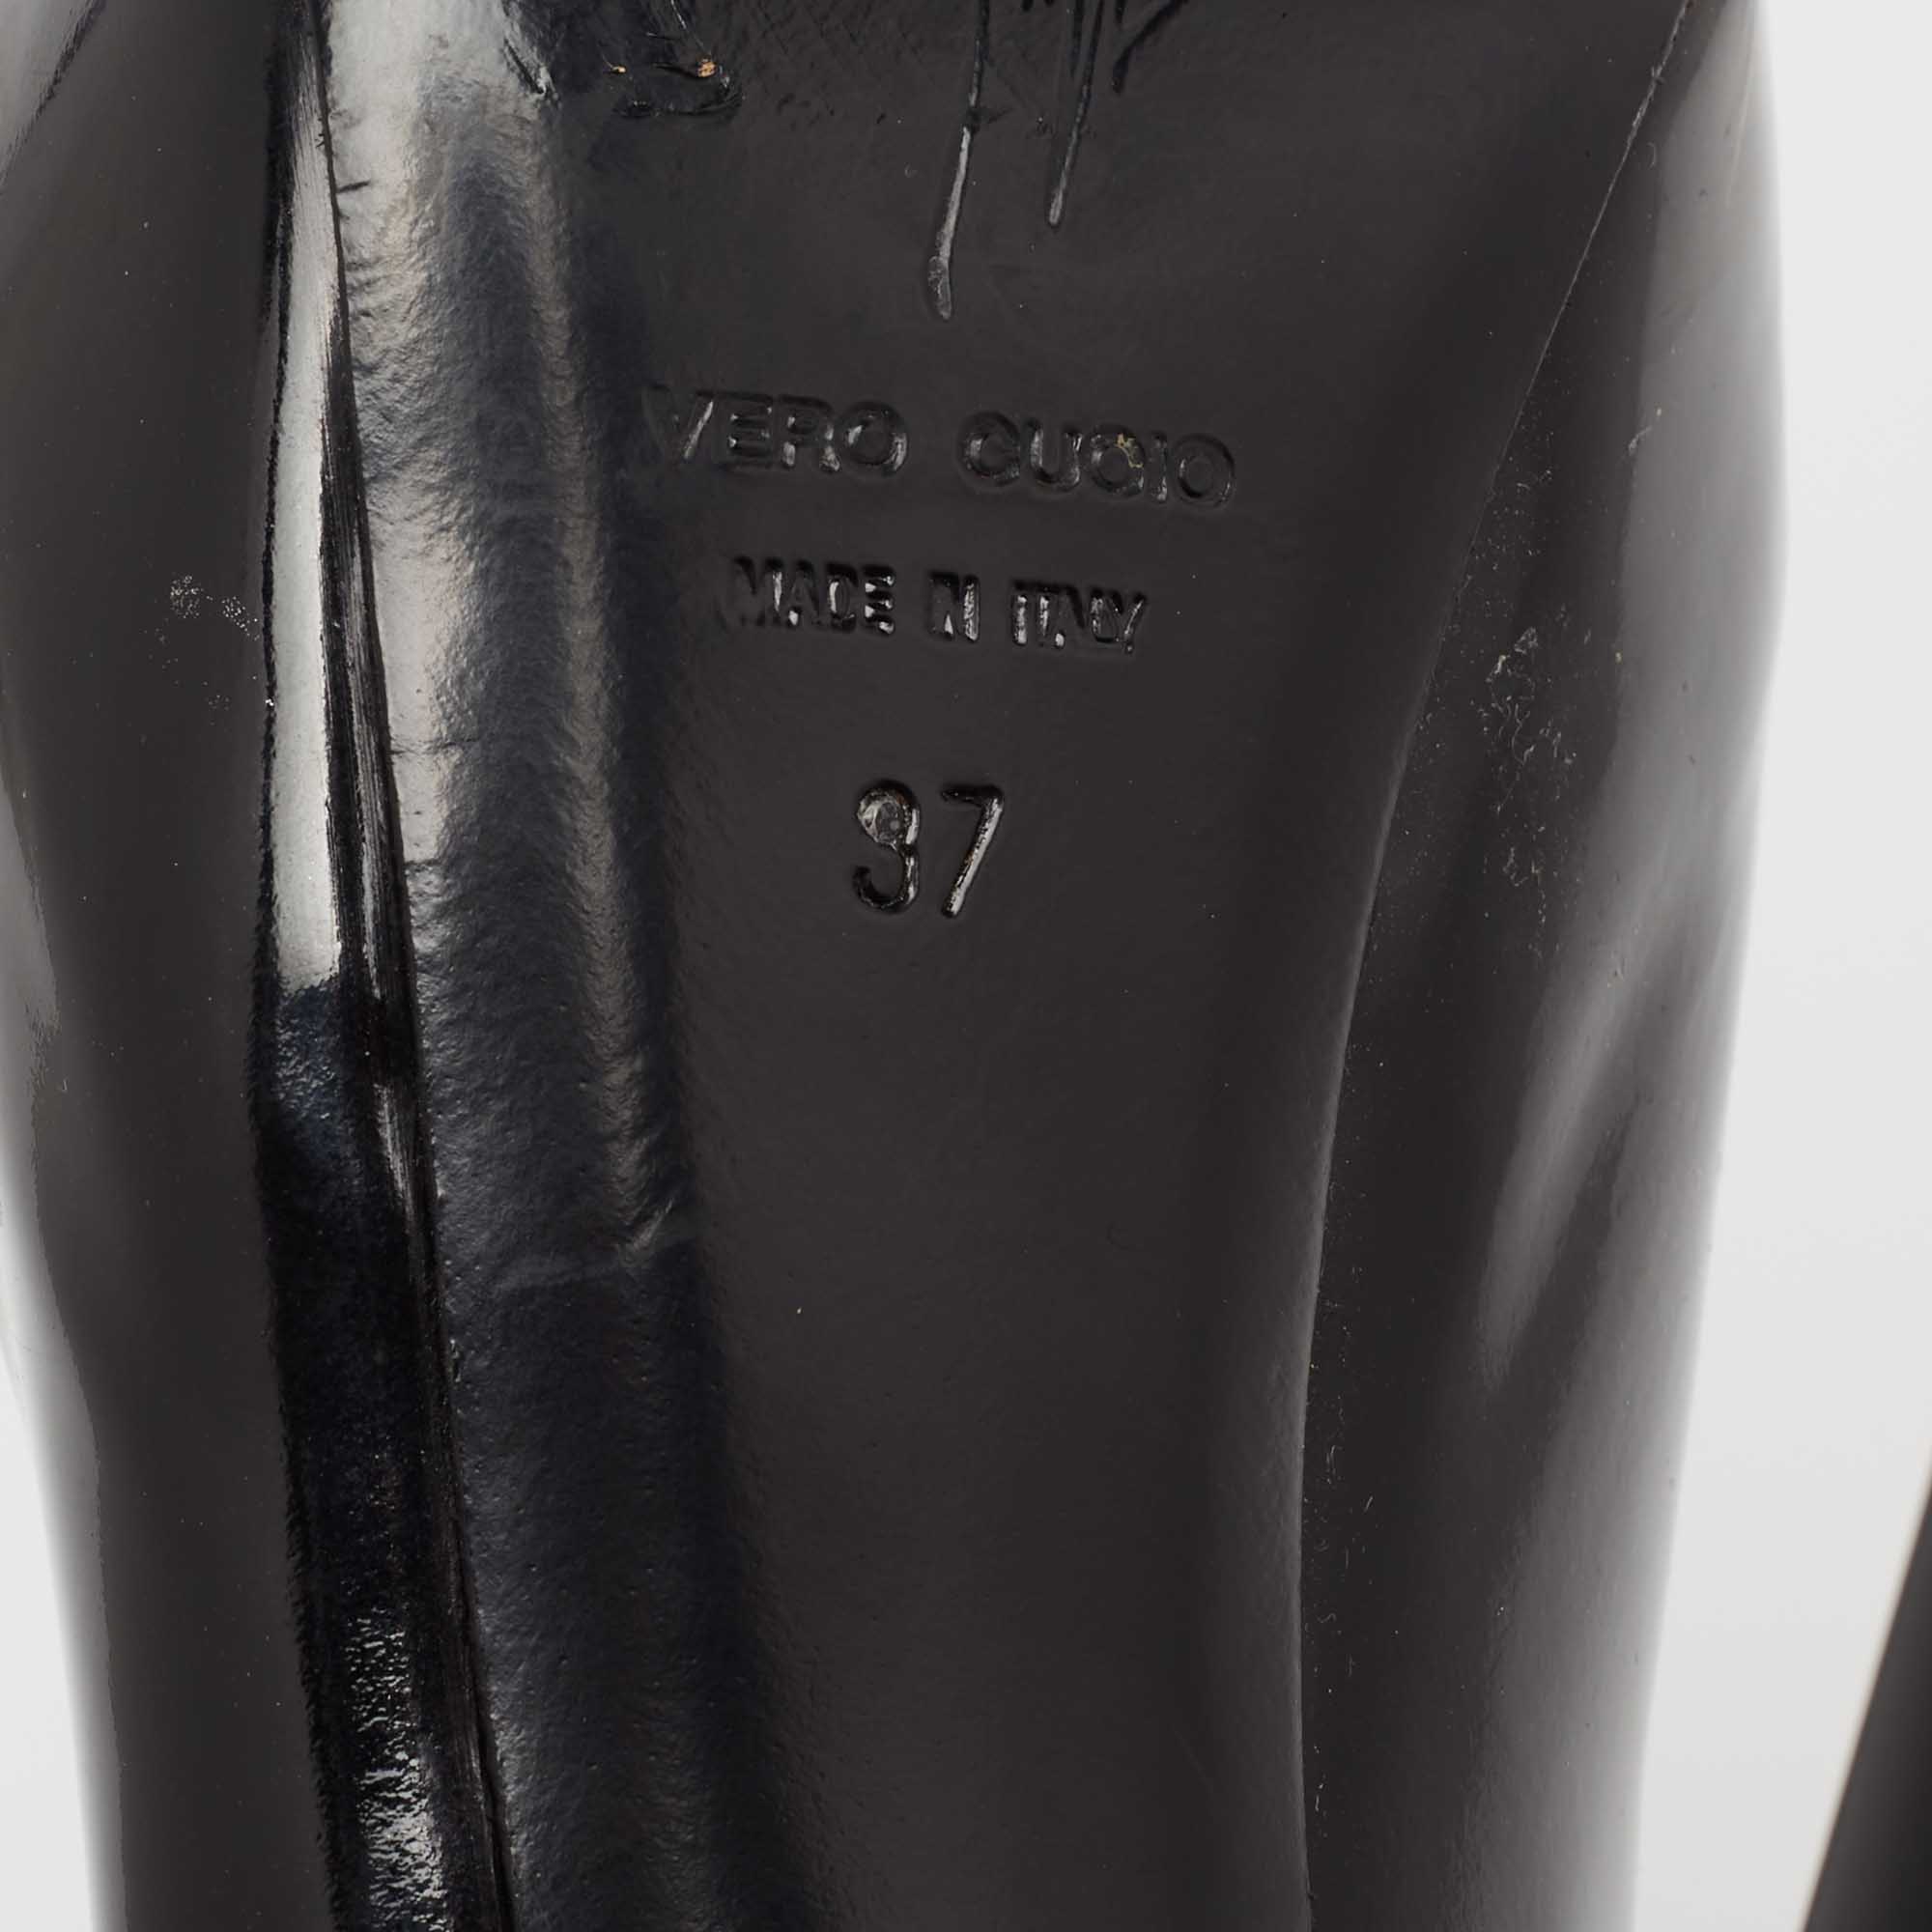 Giuseppe Zanotti Black Patent Leather Platform Peep Toe Pumps Size 37